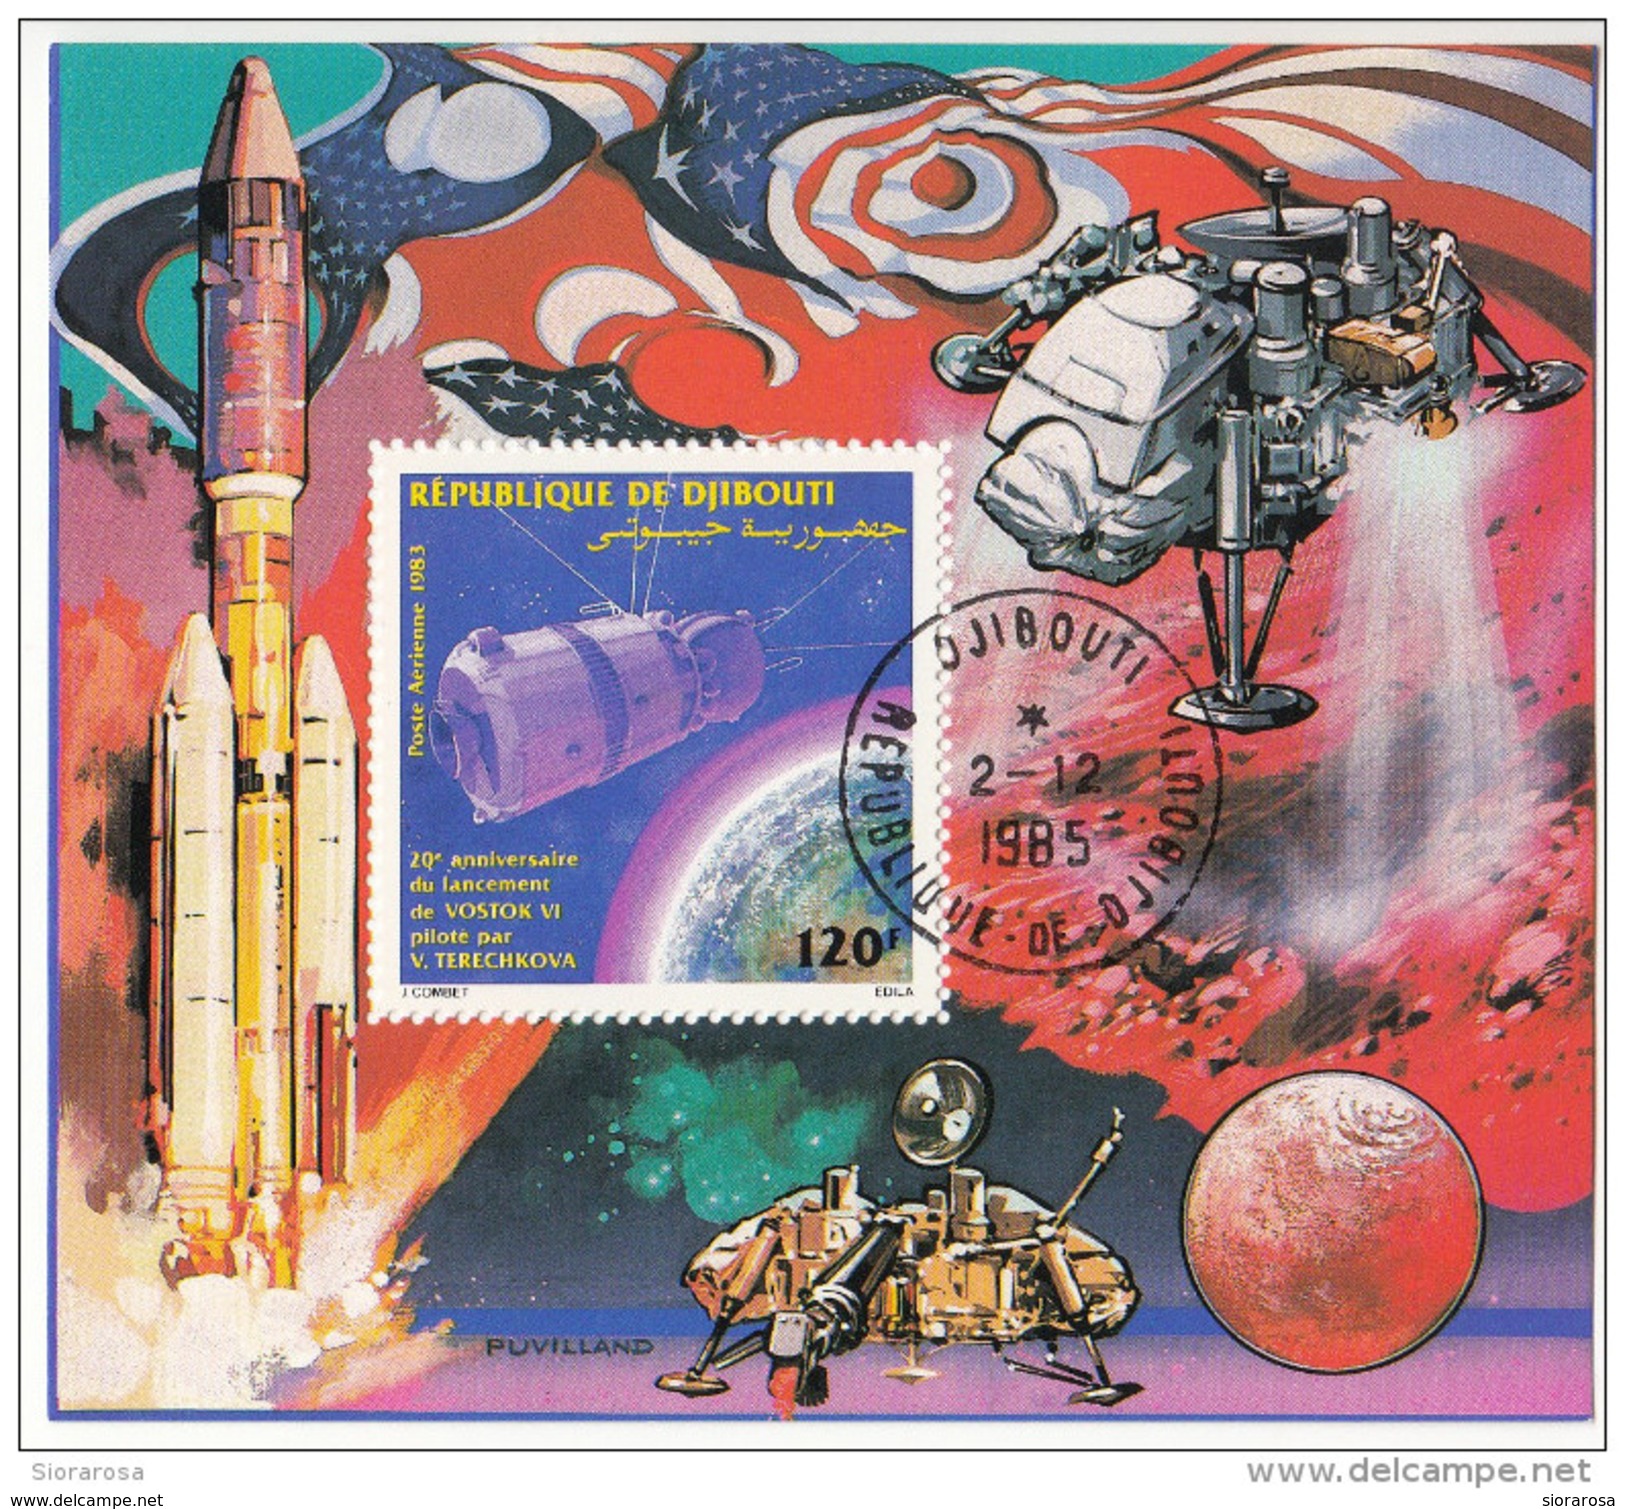 C188  Djibouti 1983 Space Vostok VI - V. Terechkova Spazio Sheet Perf. - Africa